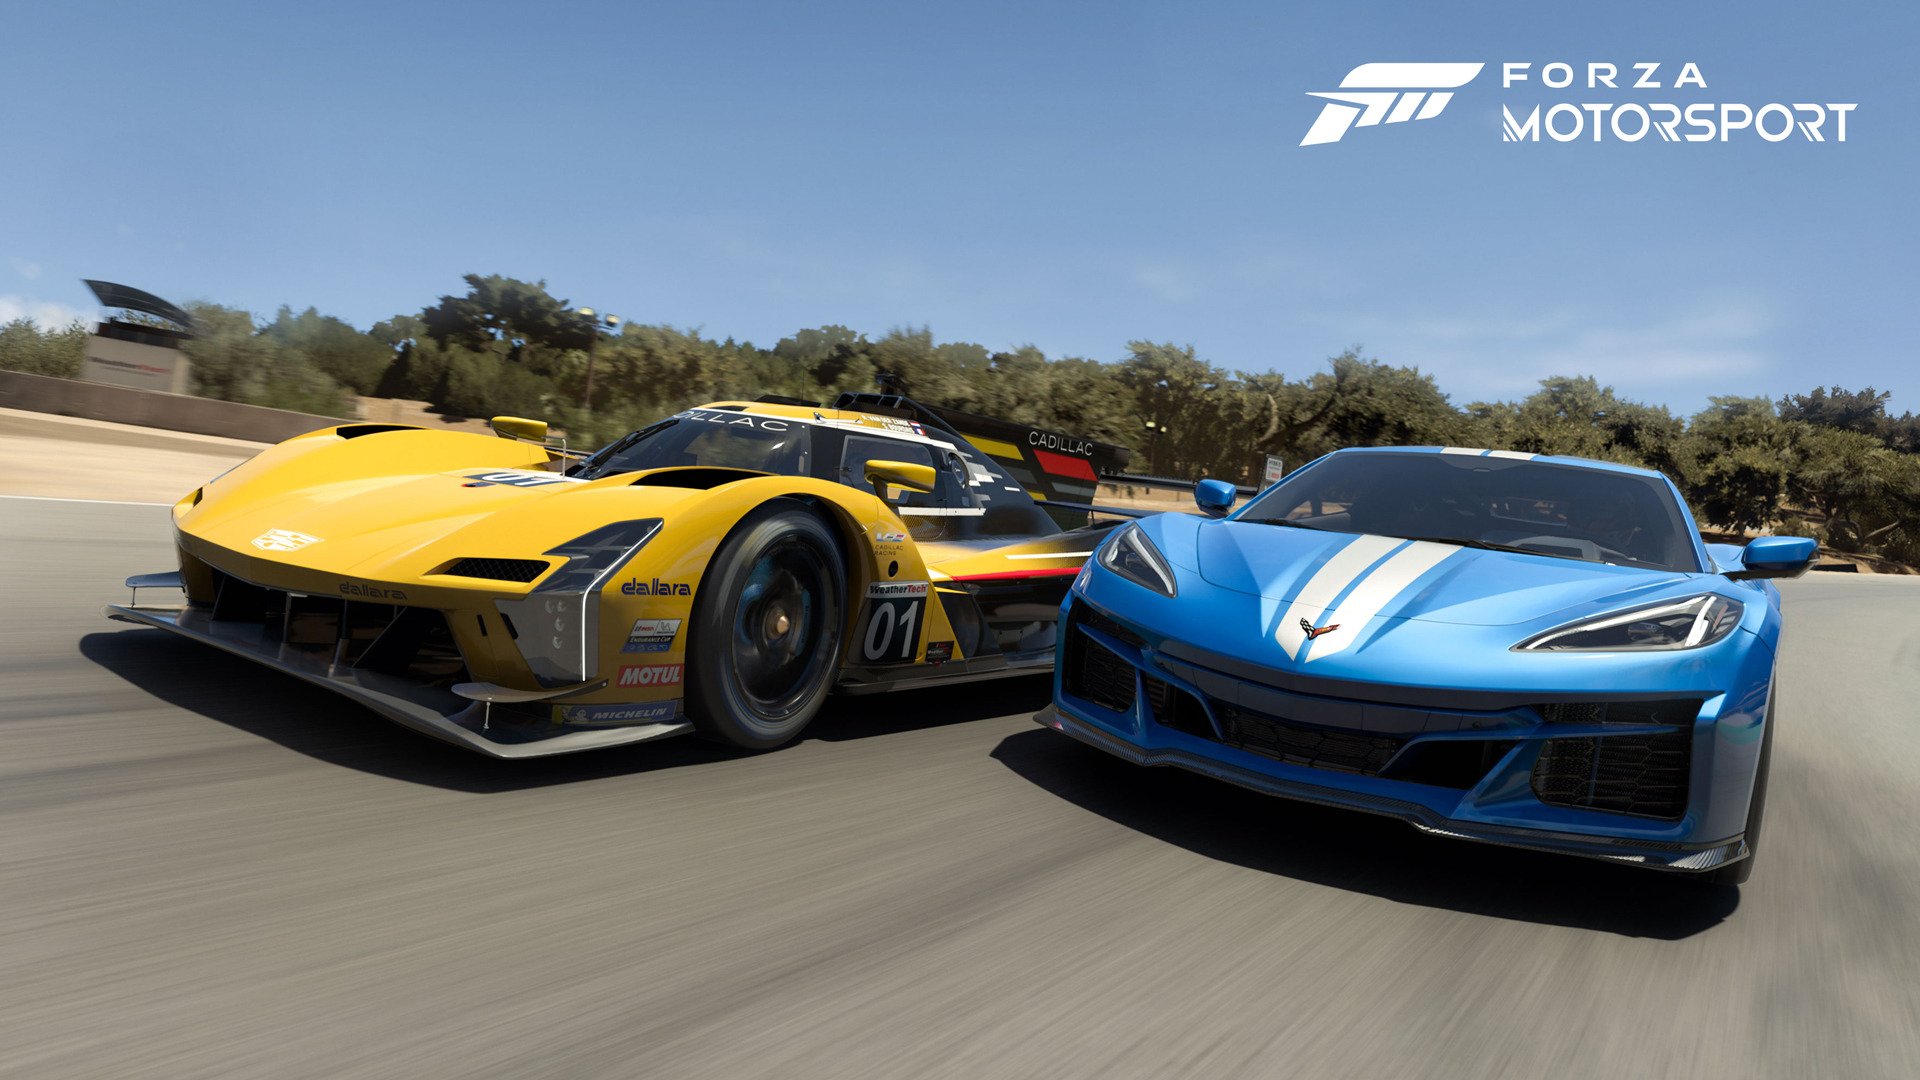 Forza Horizon 5 Review: Viva La Evolucion – GTPlanet